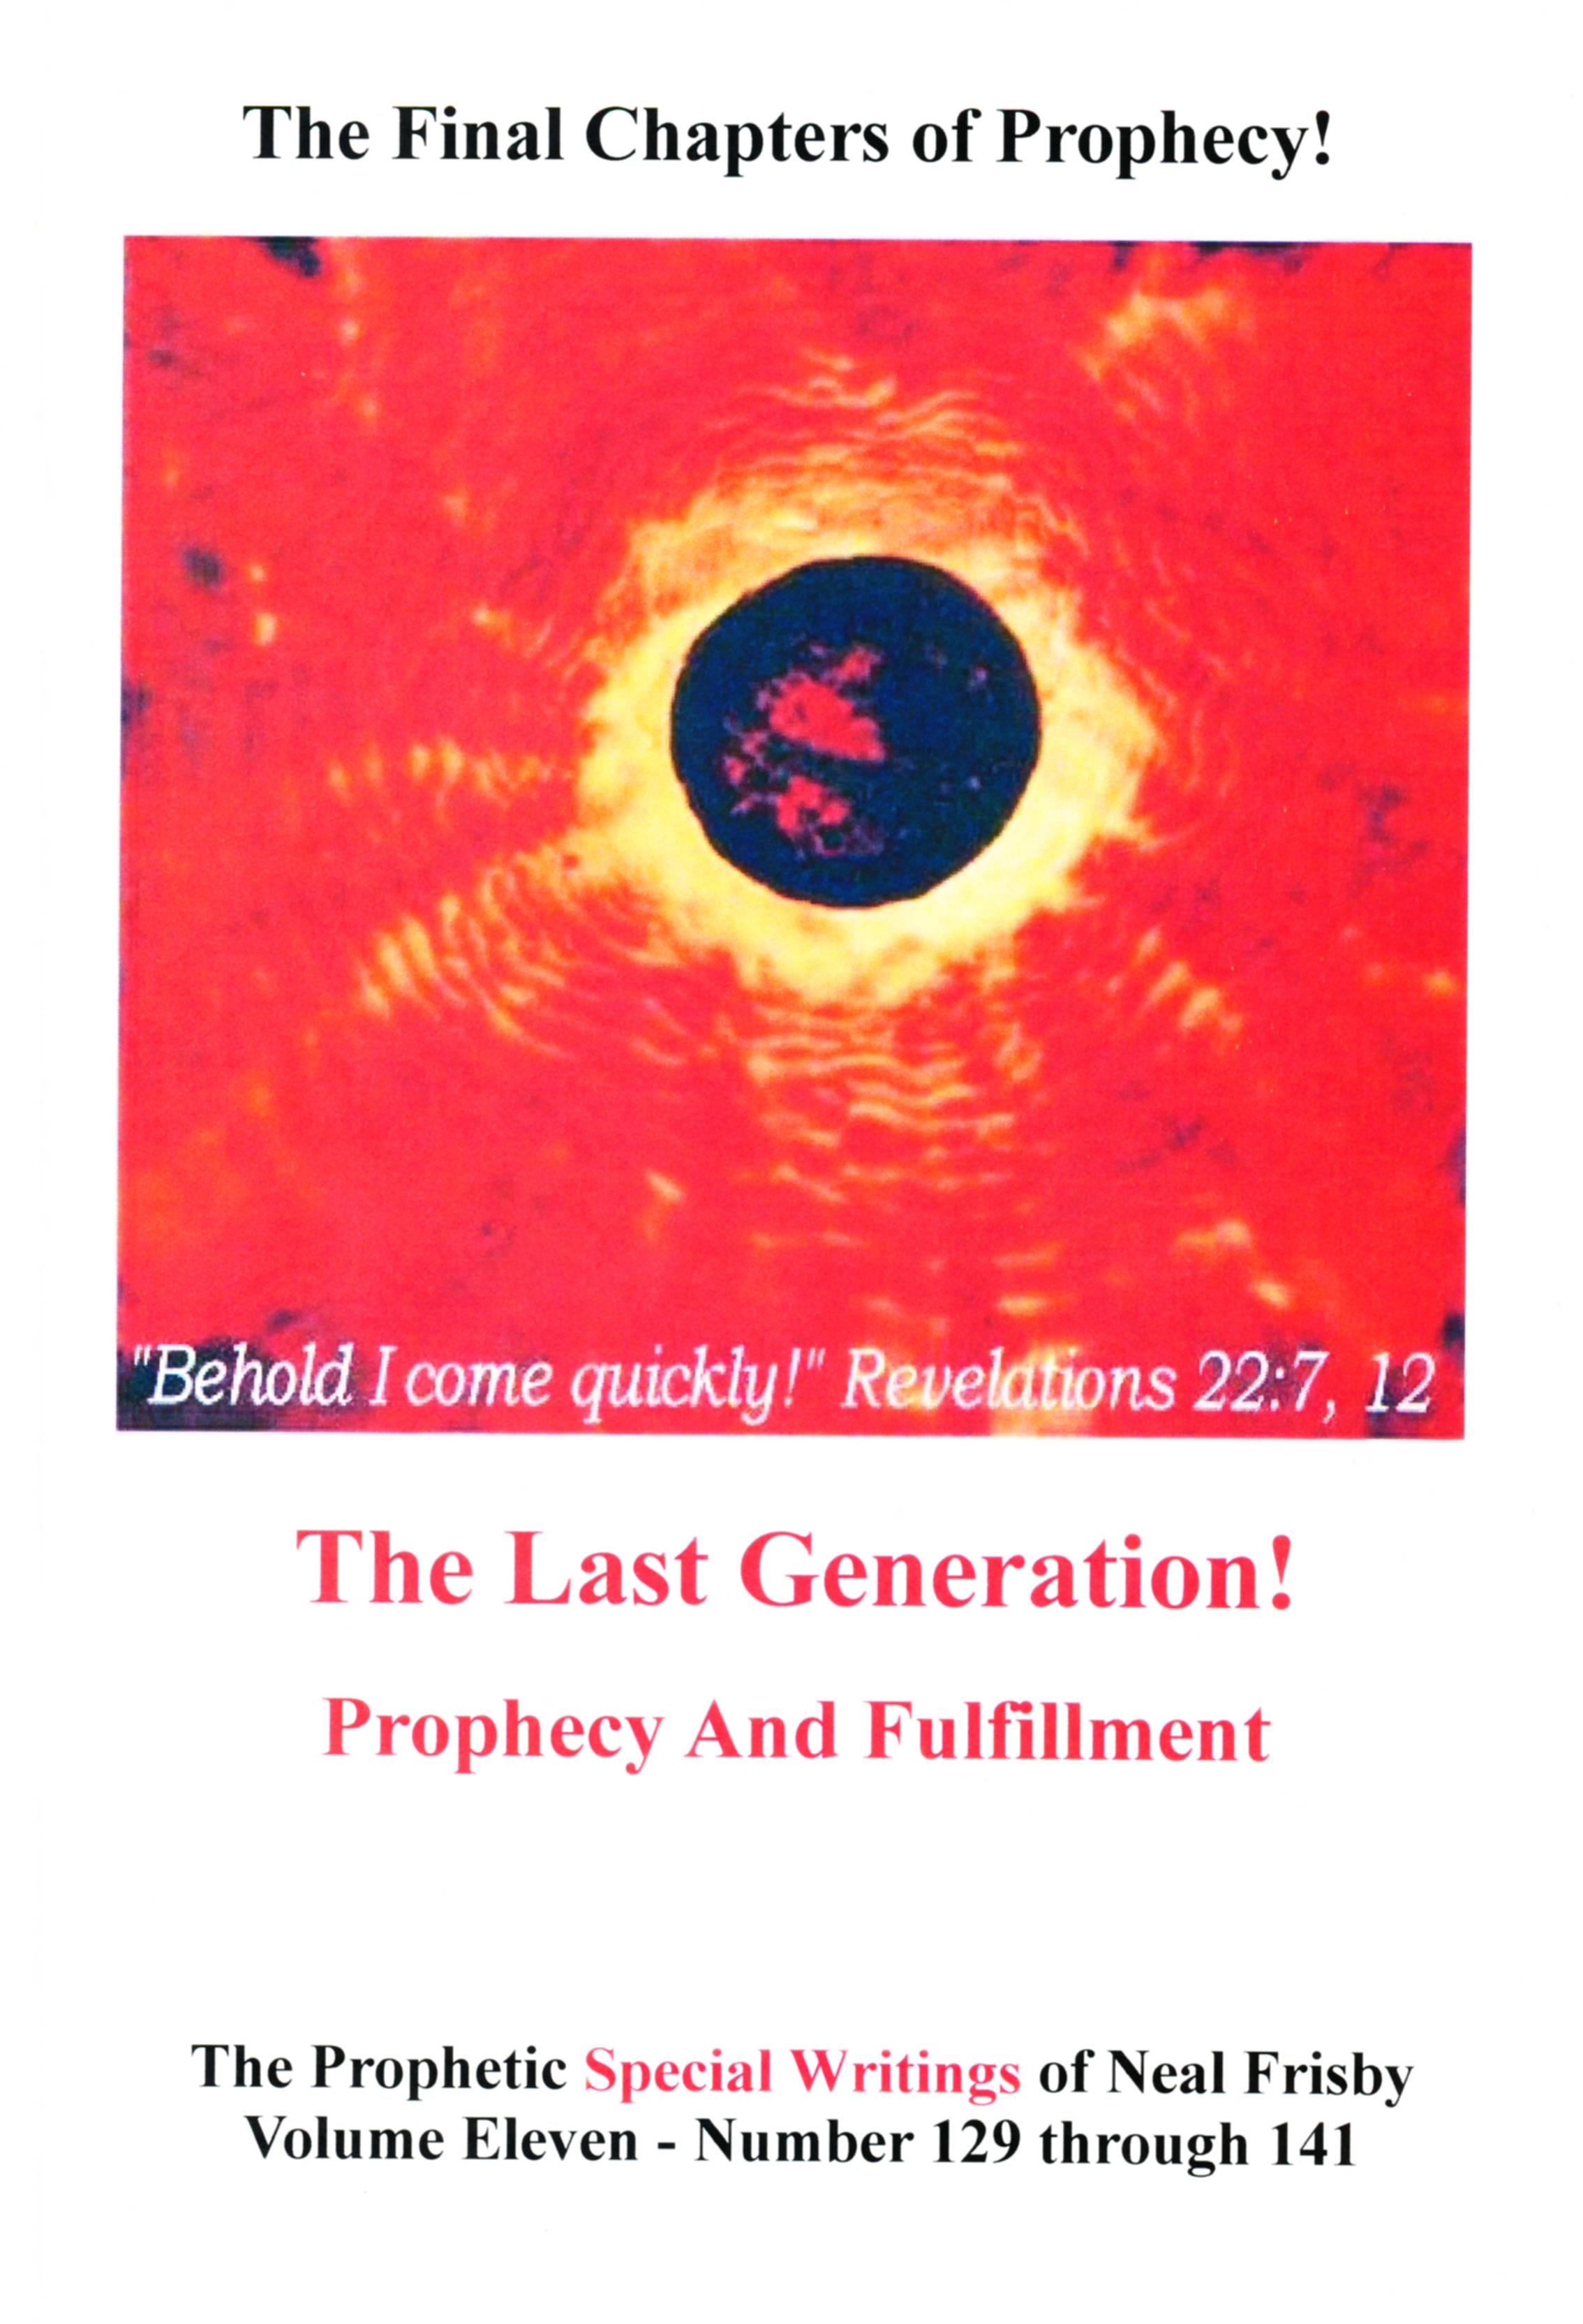 Volume 11 - The Last Generation!